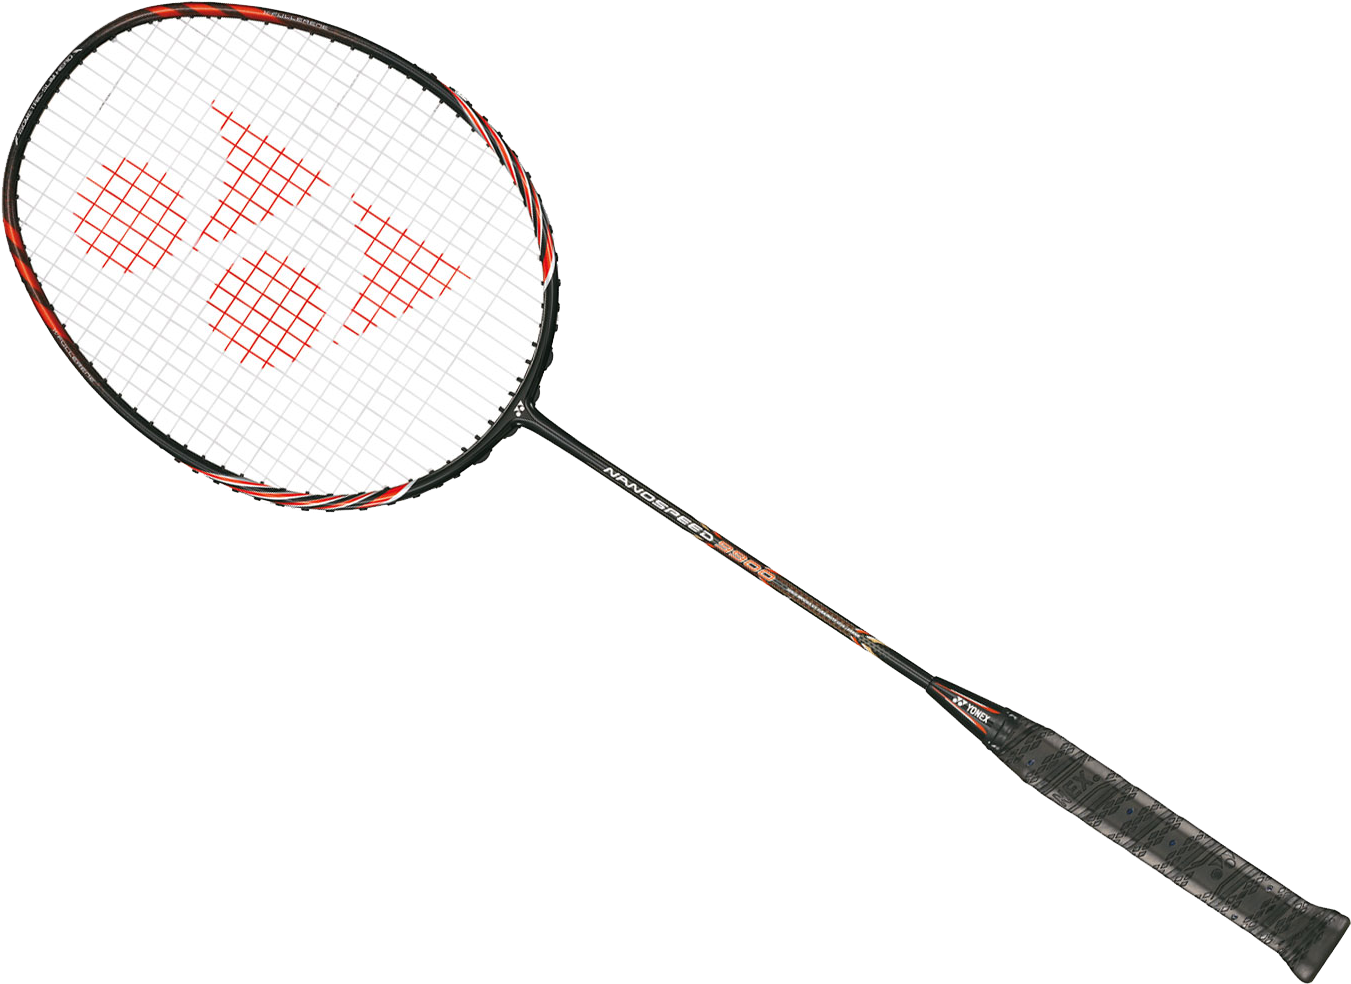 Badminton - Voltric Z Force 2 Lin Dan (1440x1080)